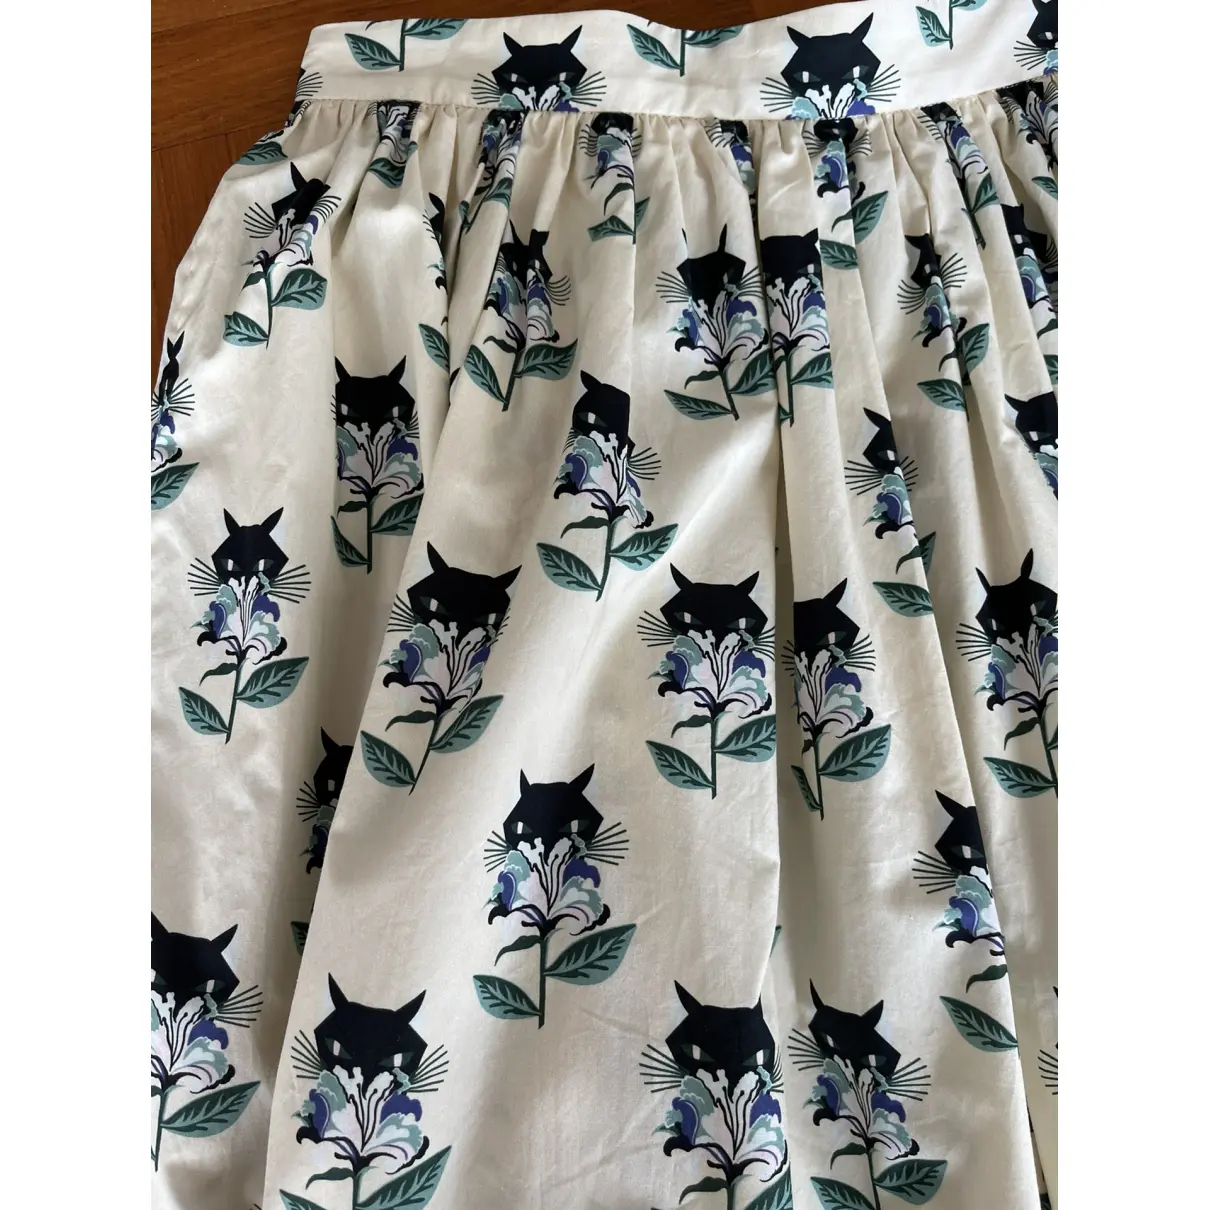 Buy Miu Miu Mini skirt online